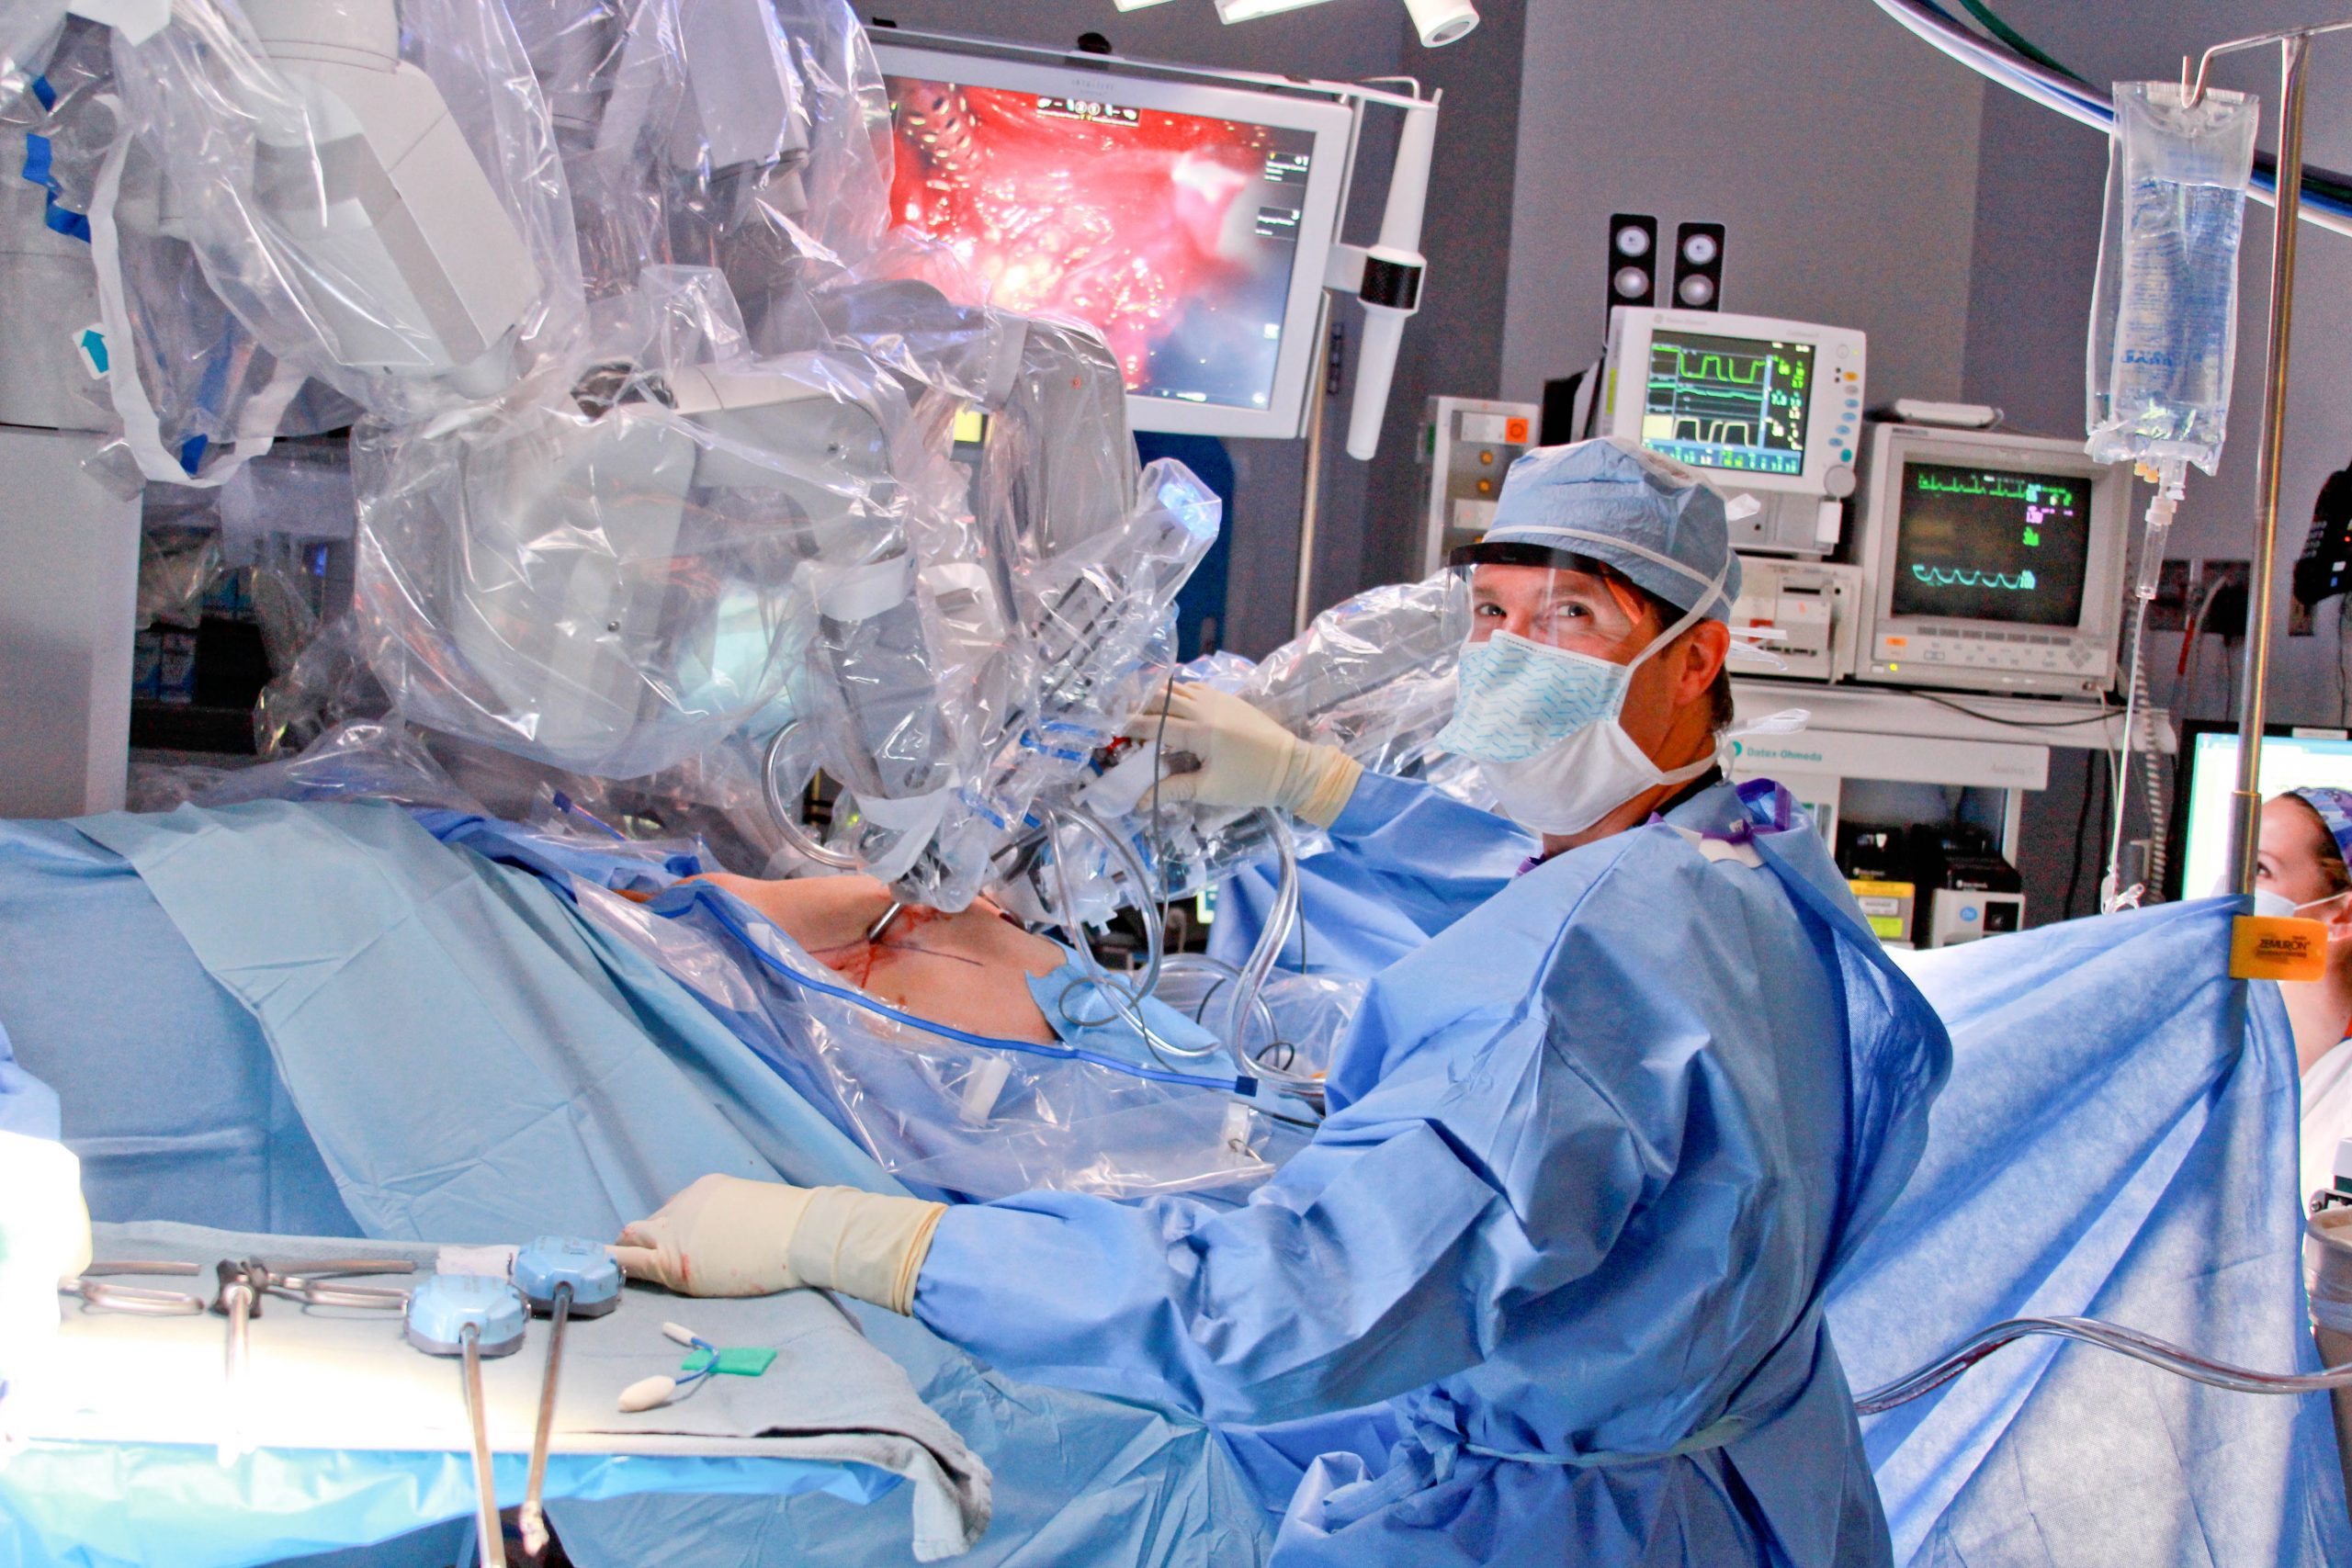 Prostate cancer surgery robot Video